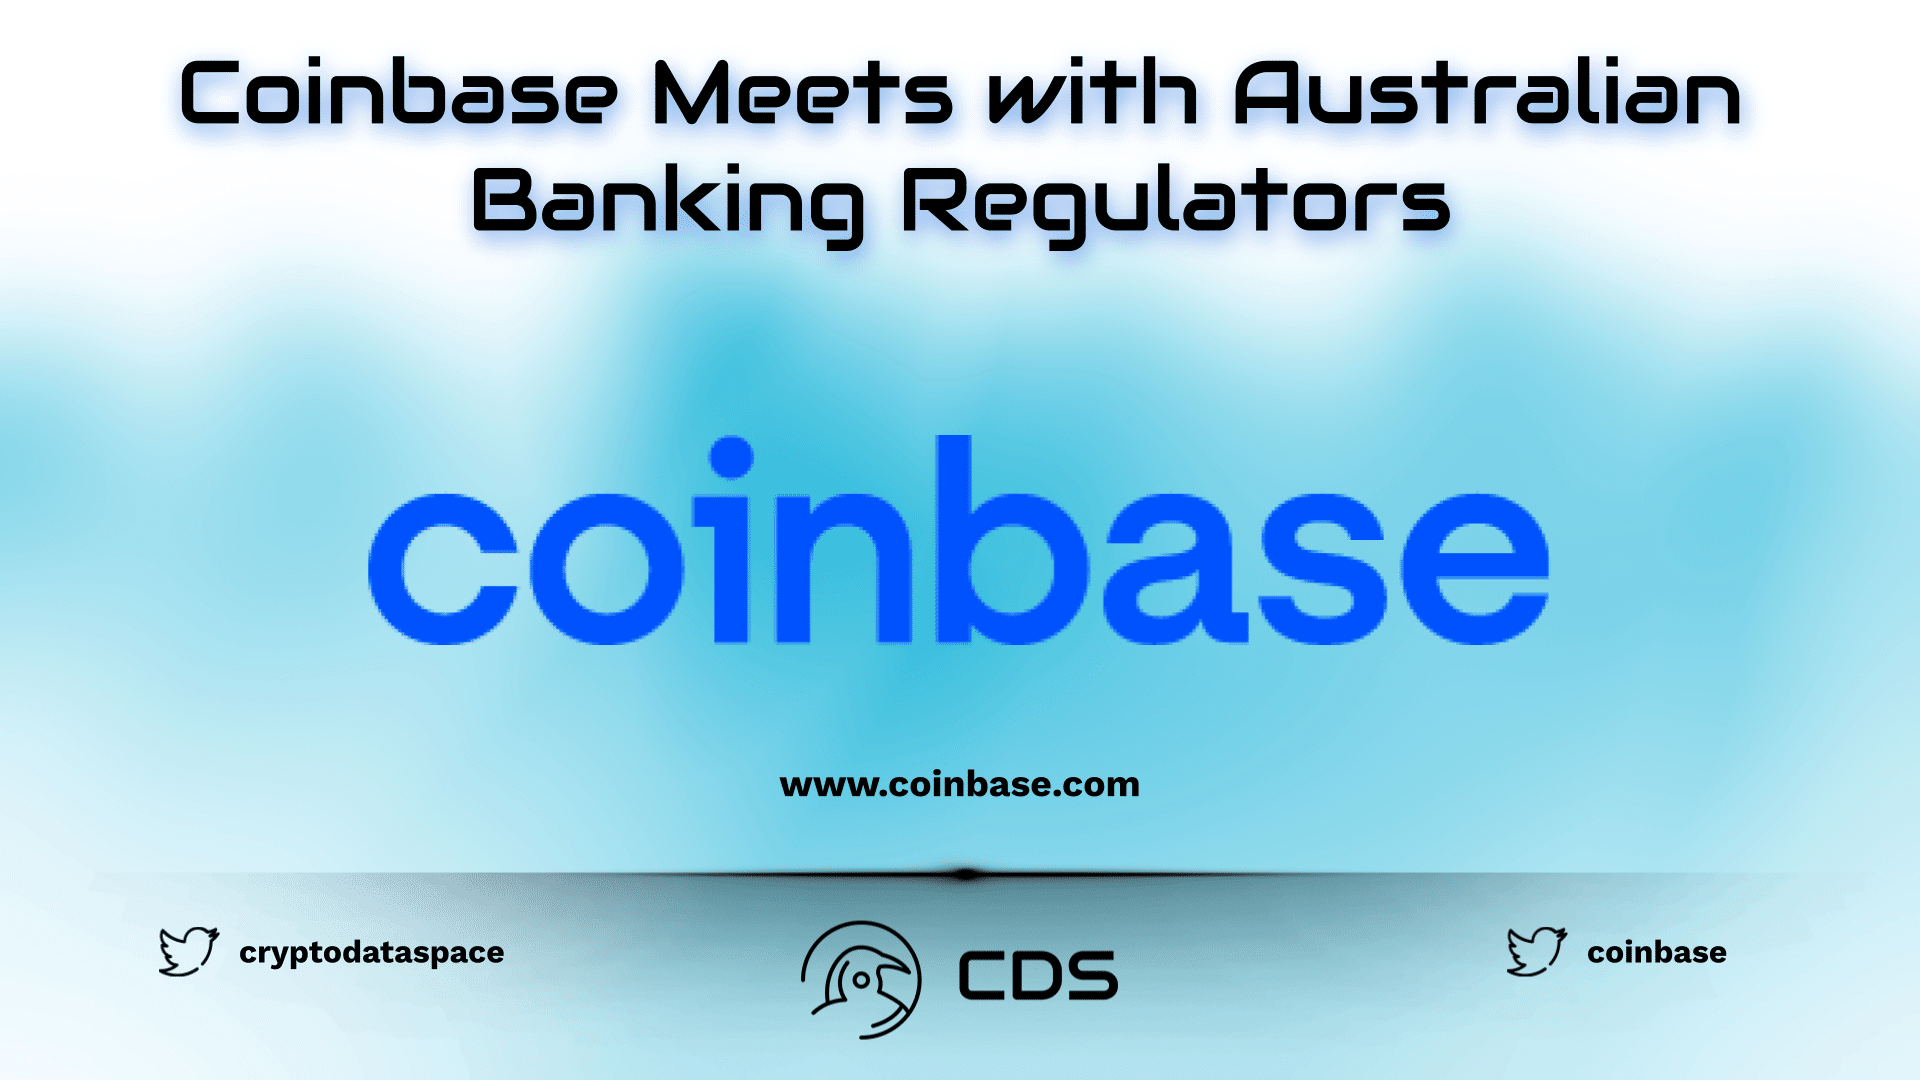 coinbase meets with australian banking regulators